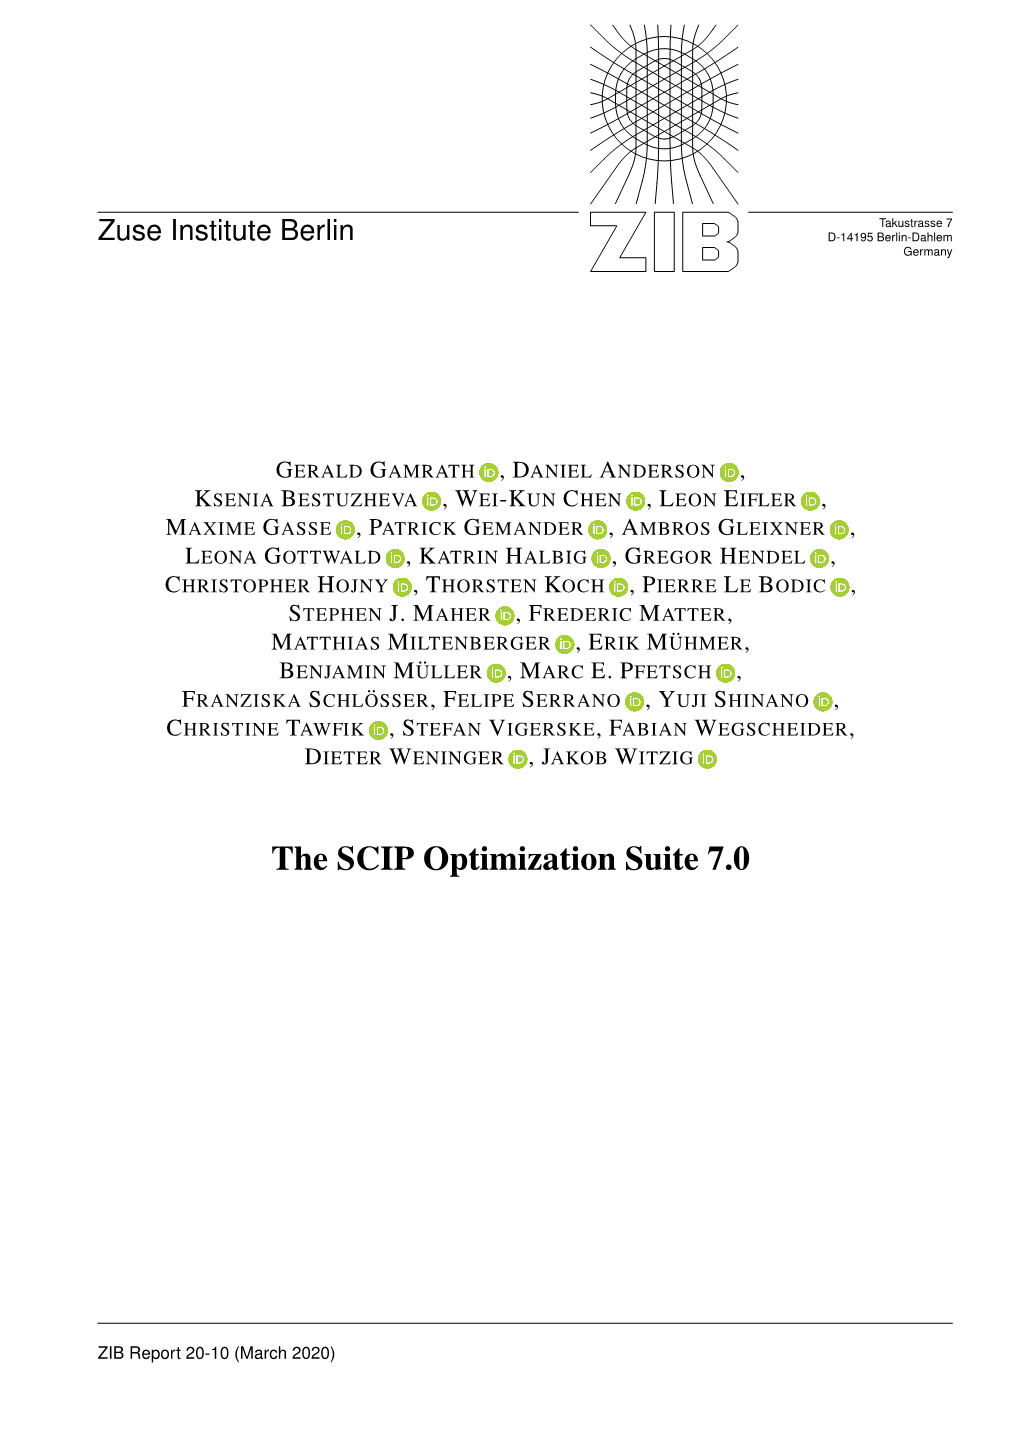 The SCIP Optimization Suite 7.0